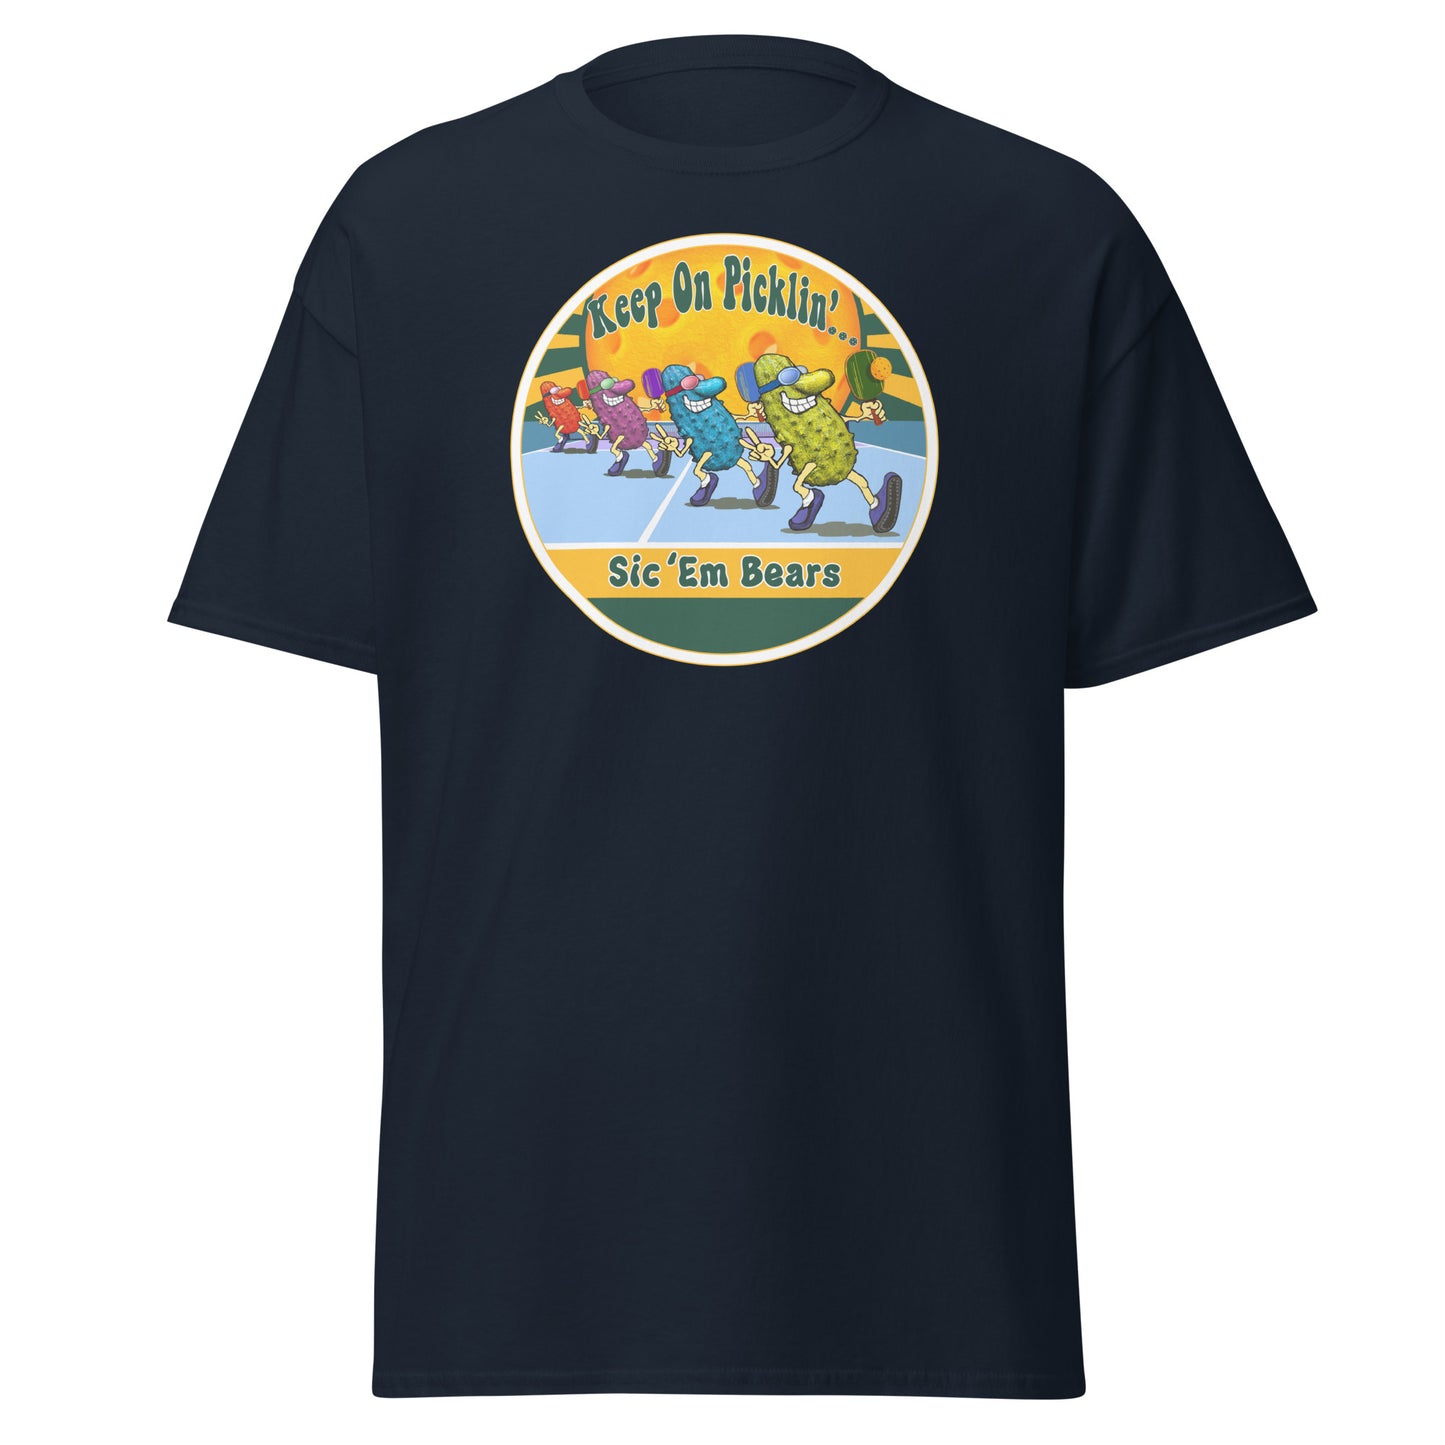 Baylor Bears Pickleball Shirt, Short-sleeve Tee, Pickleball Sun Graphic